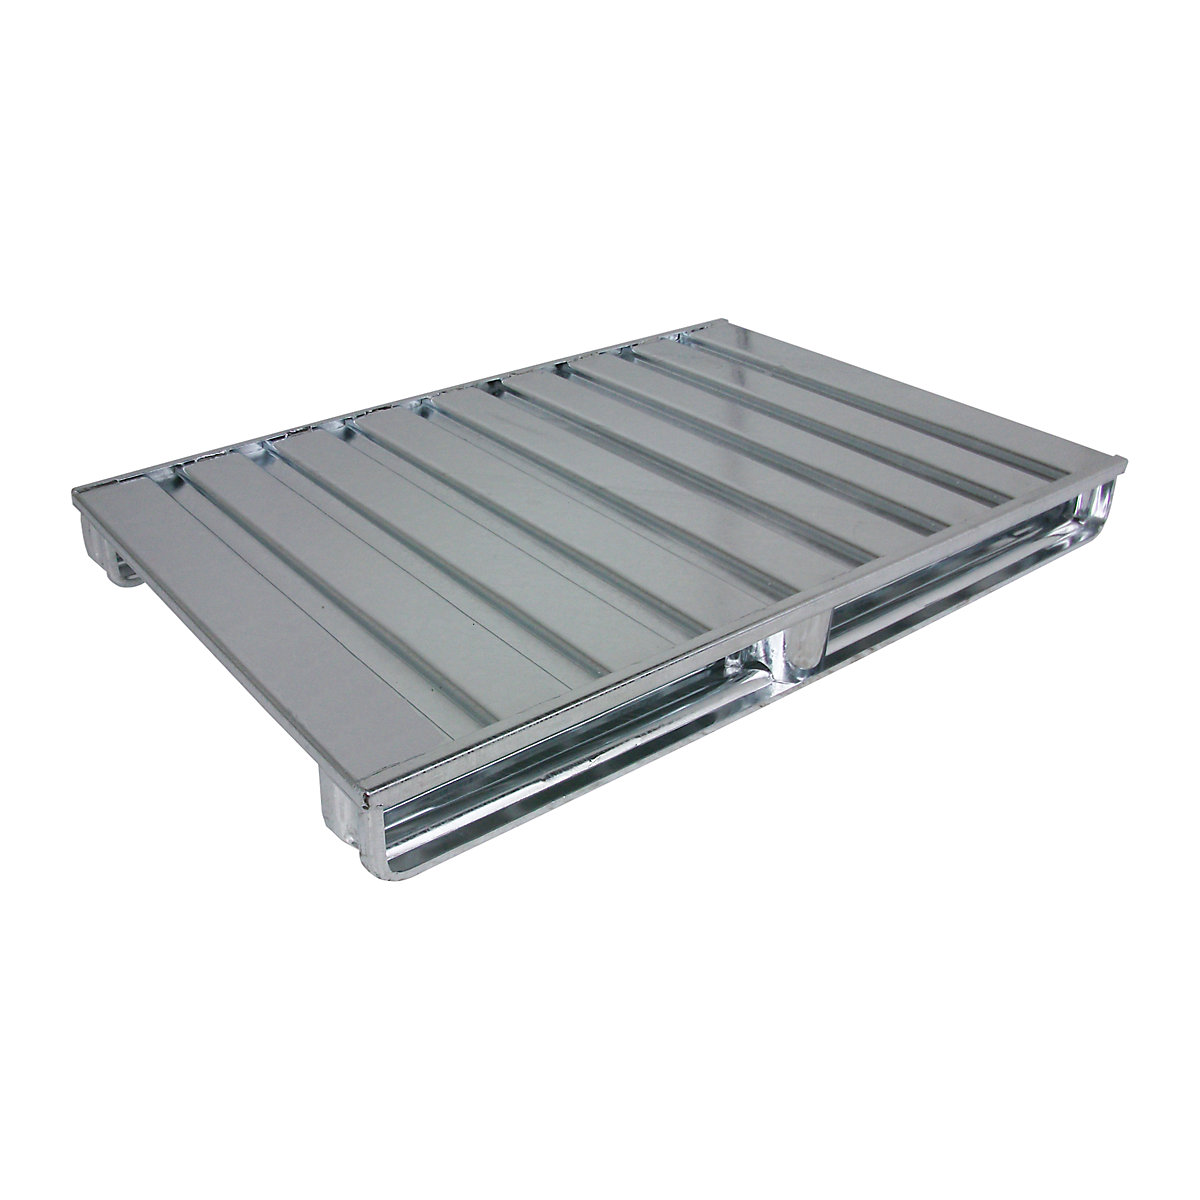 Palet plano de acero – Heson, L x A 1000 x 800 mm, carga máx. 2000 kg, galvanizado-1